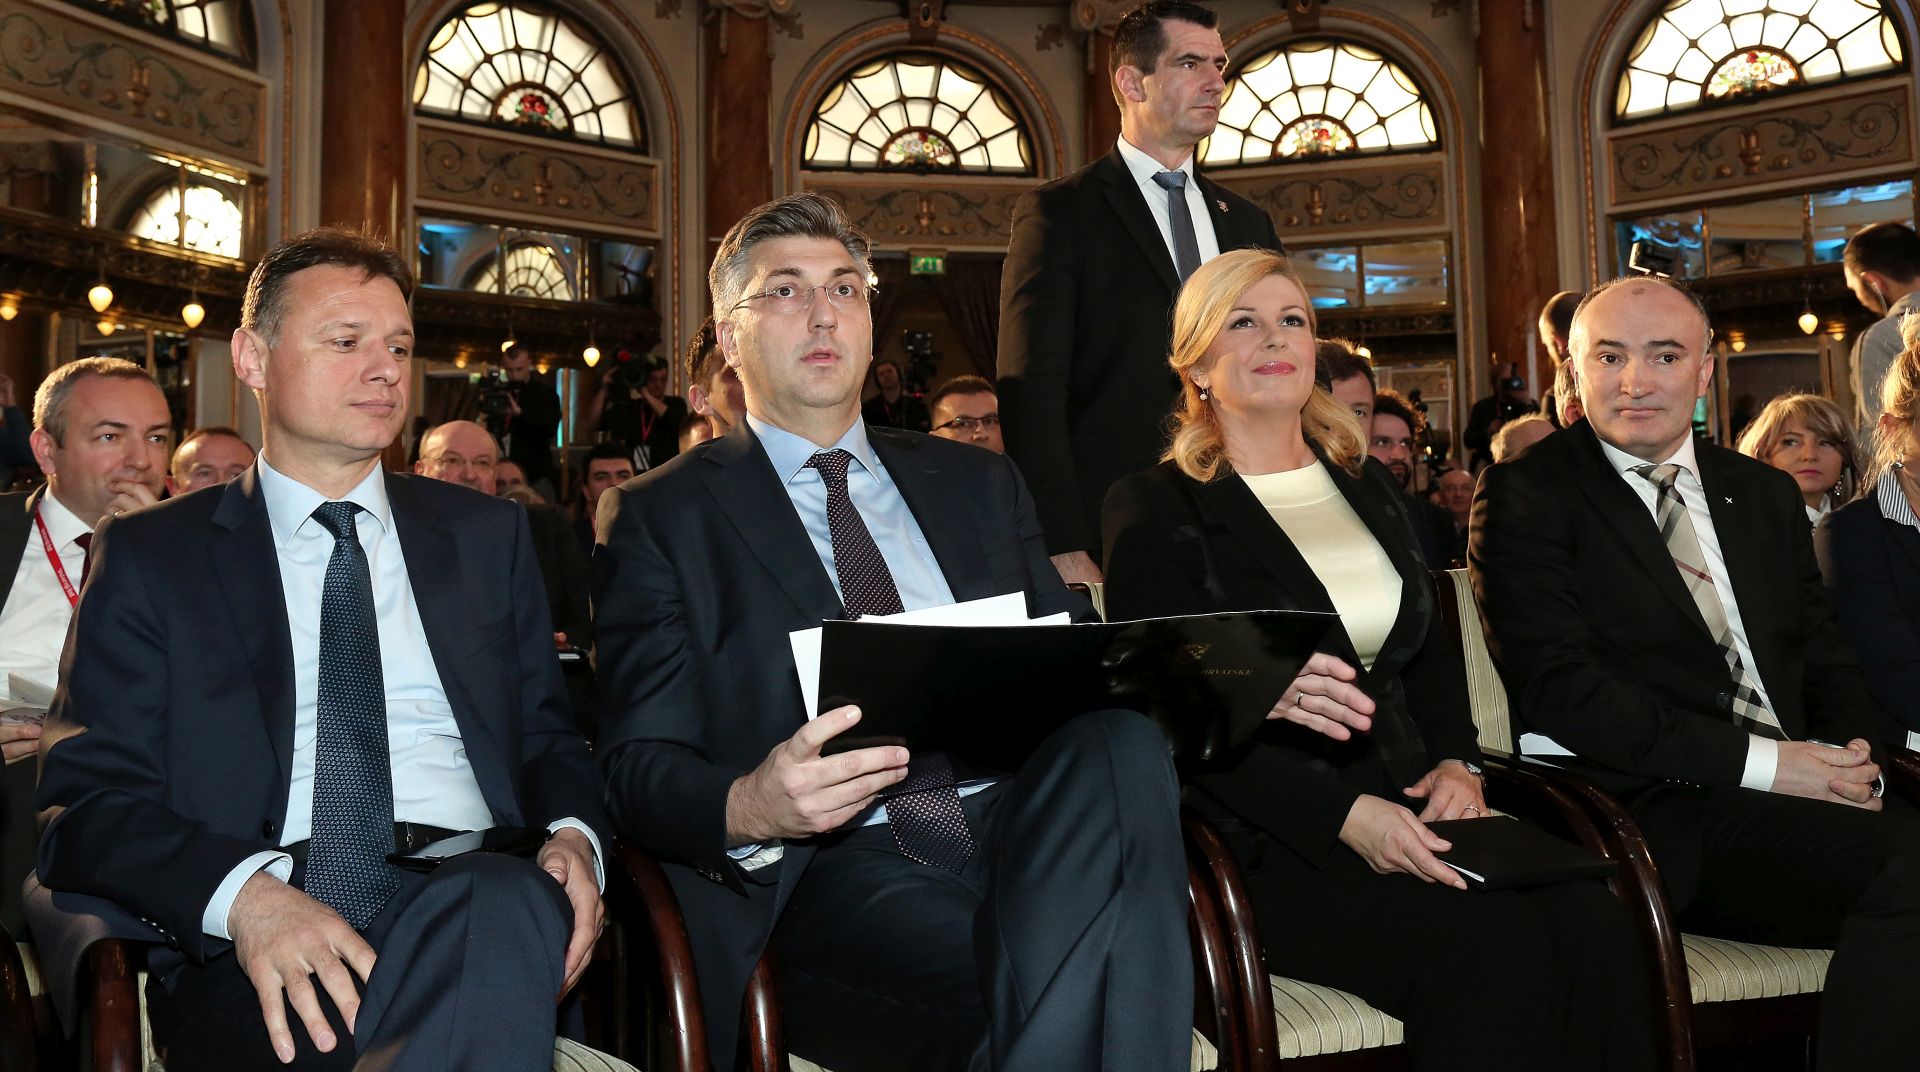 “HRVATSKA KAKVU TREBAMO”: Konferencija okupila državni vrh i brojne znanstvenike